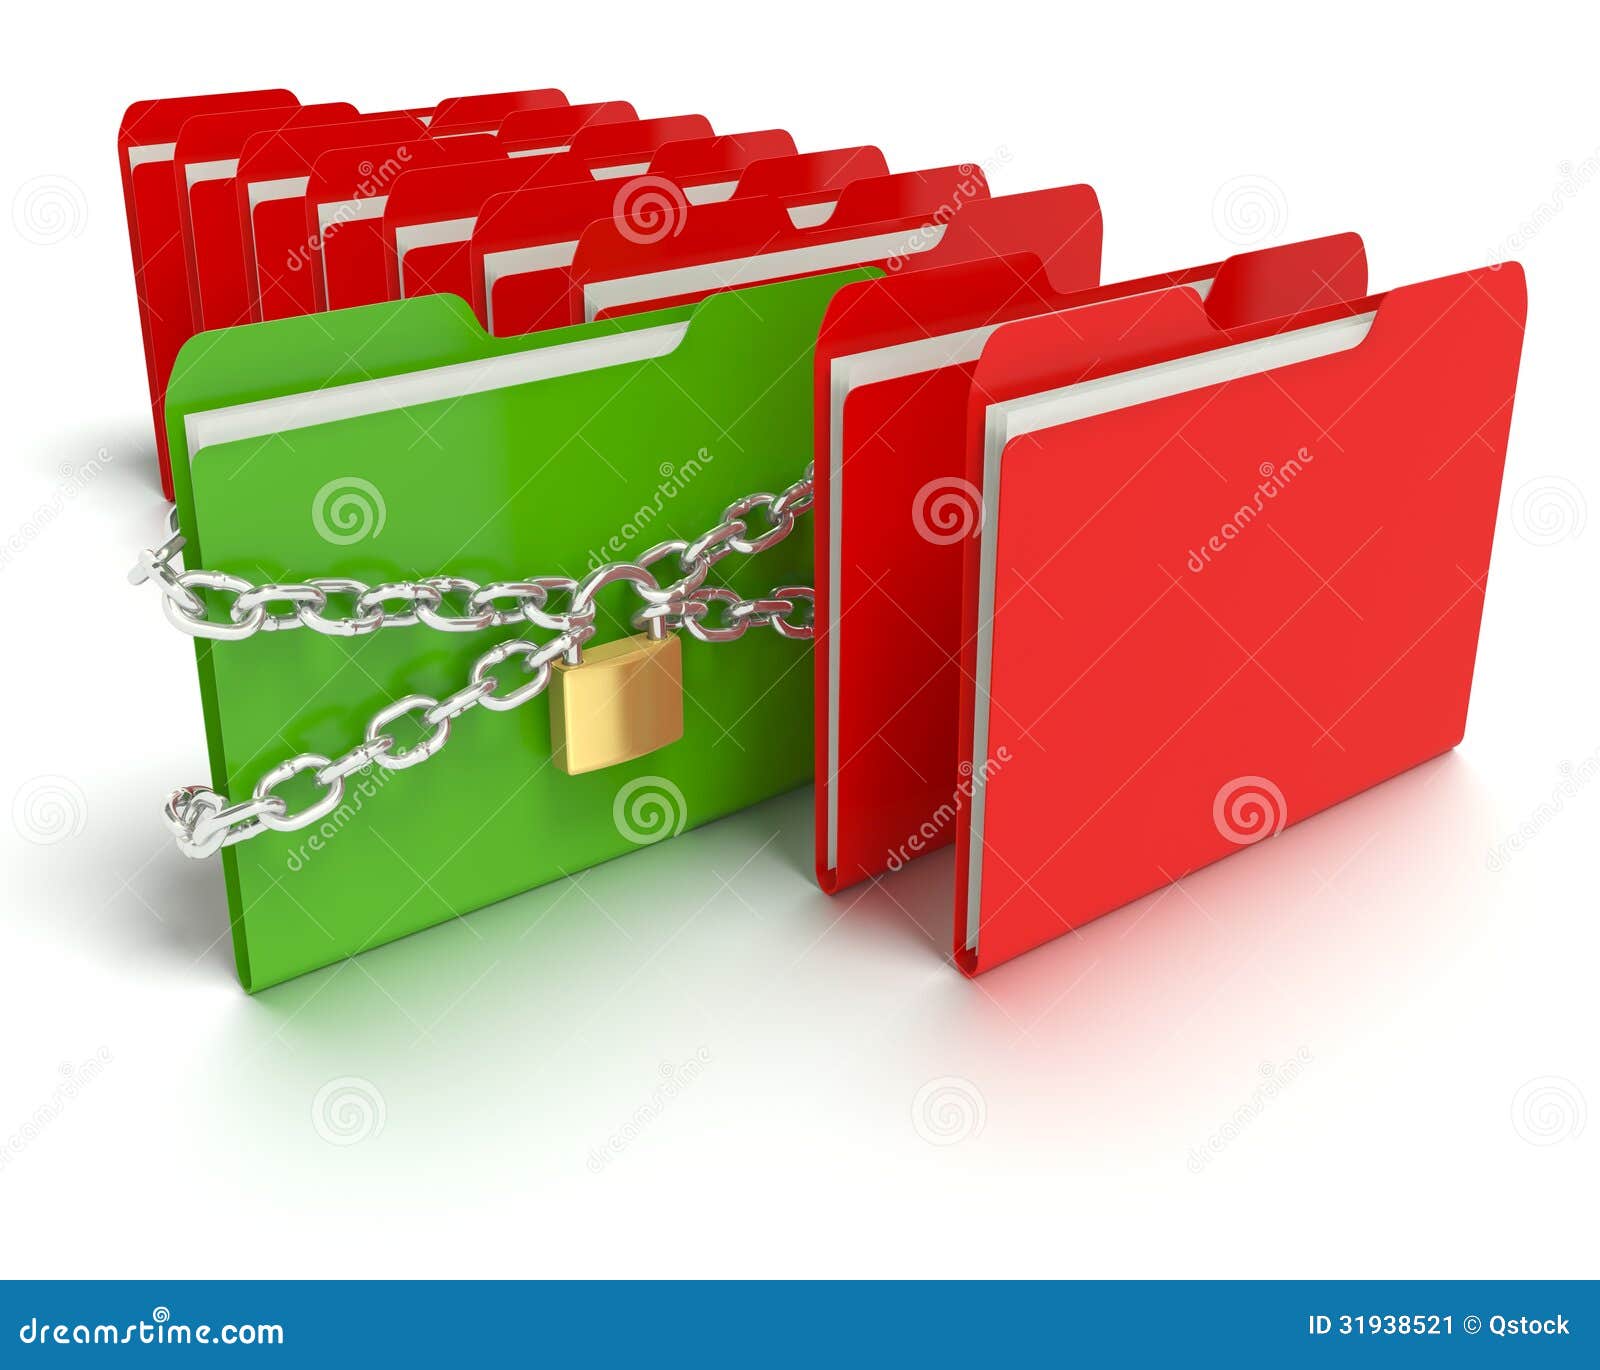 C защита файла. Защита файлов. Защита файлов картинки. Файлы под защитой. Картинки защиты архива.